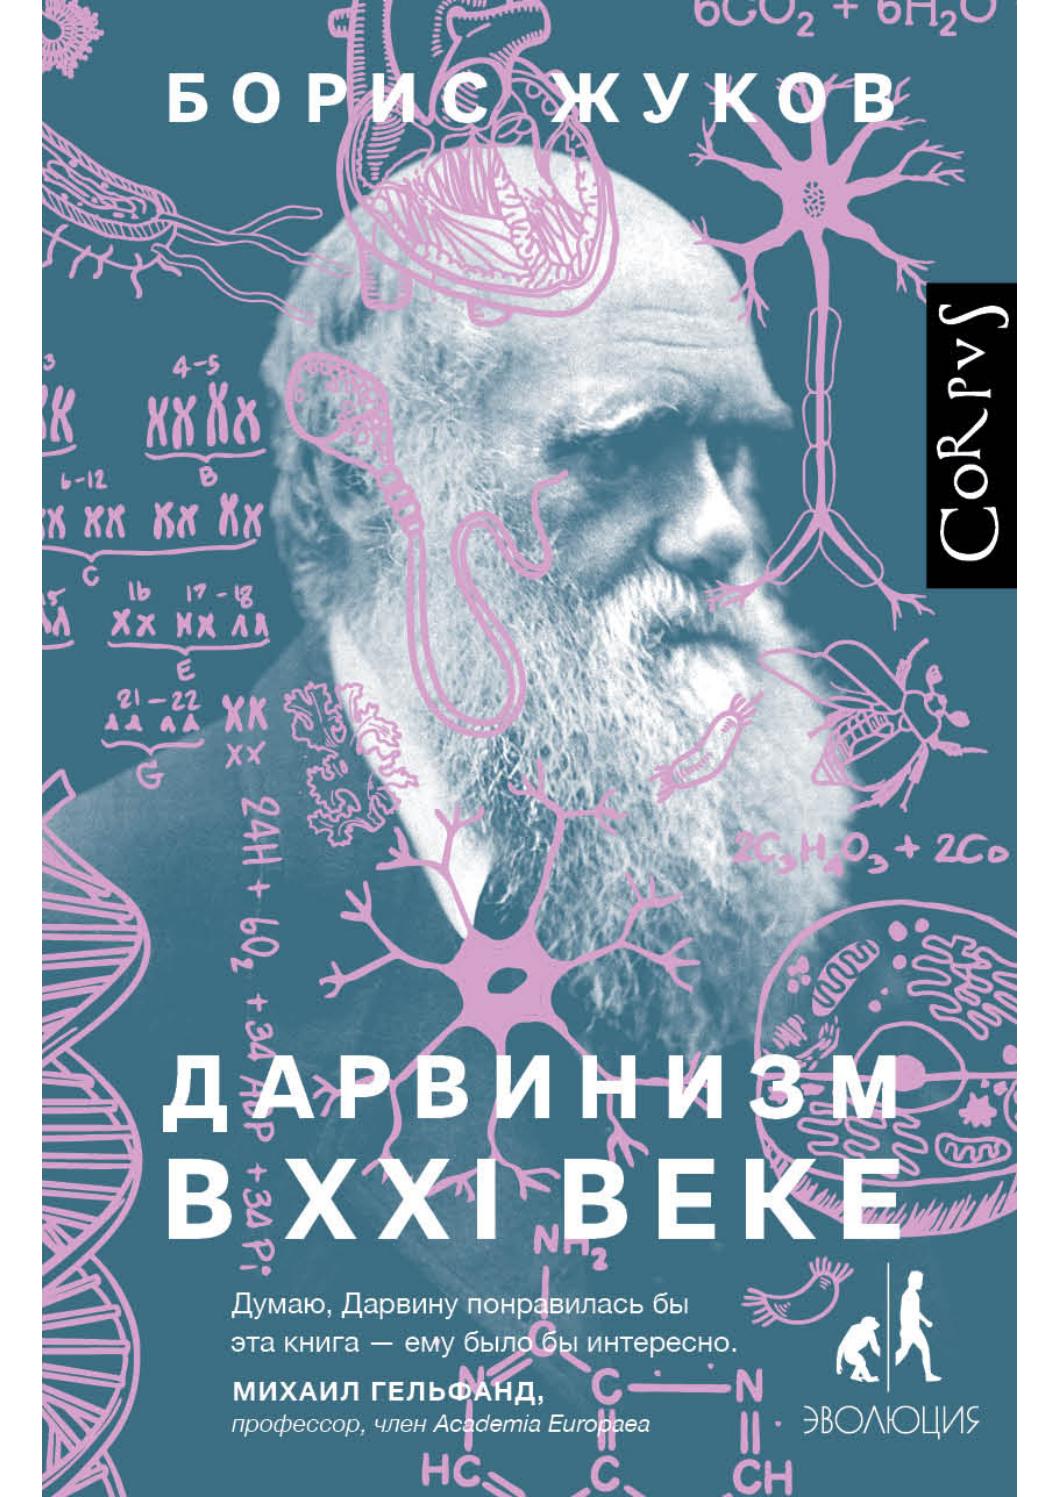 Дарвинизм в XXI веке, 2020, Борис Жуков